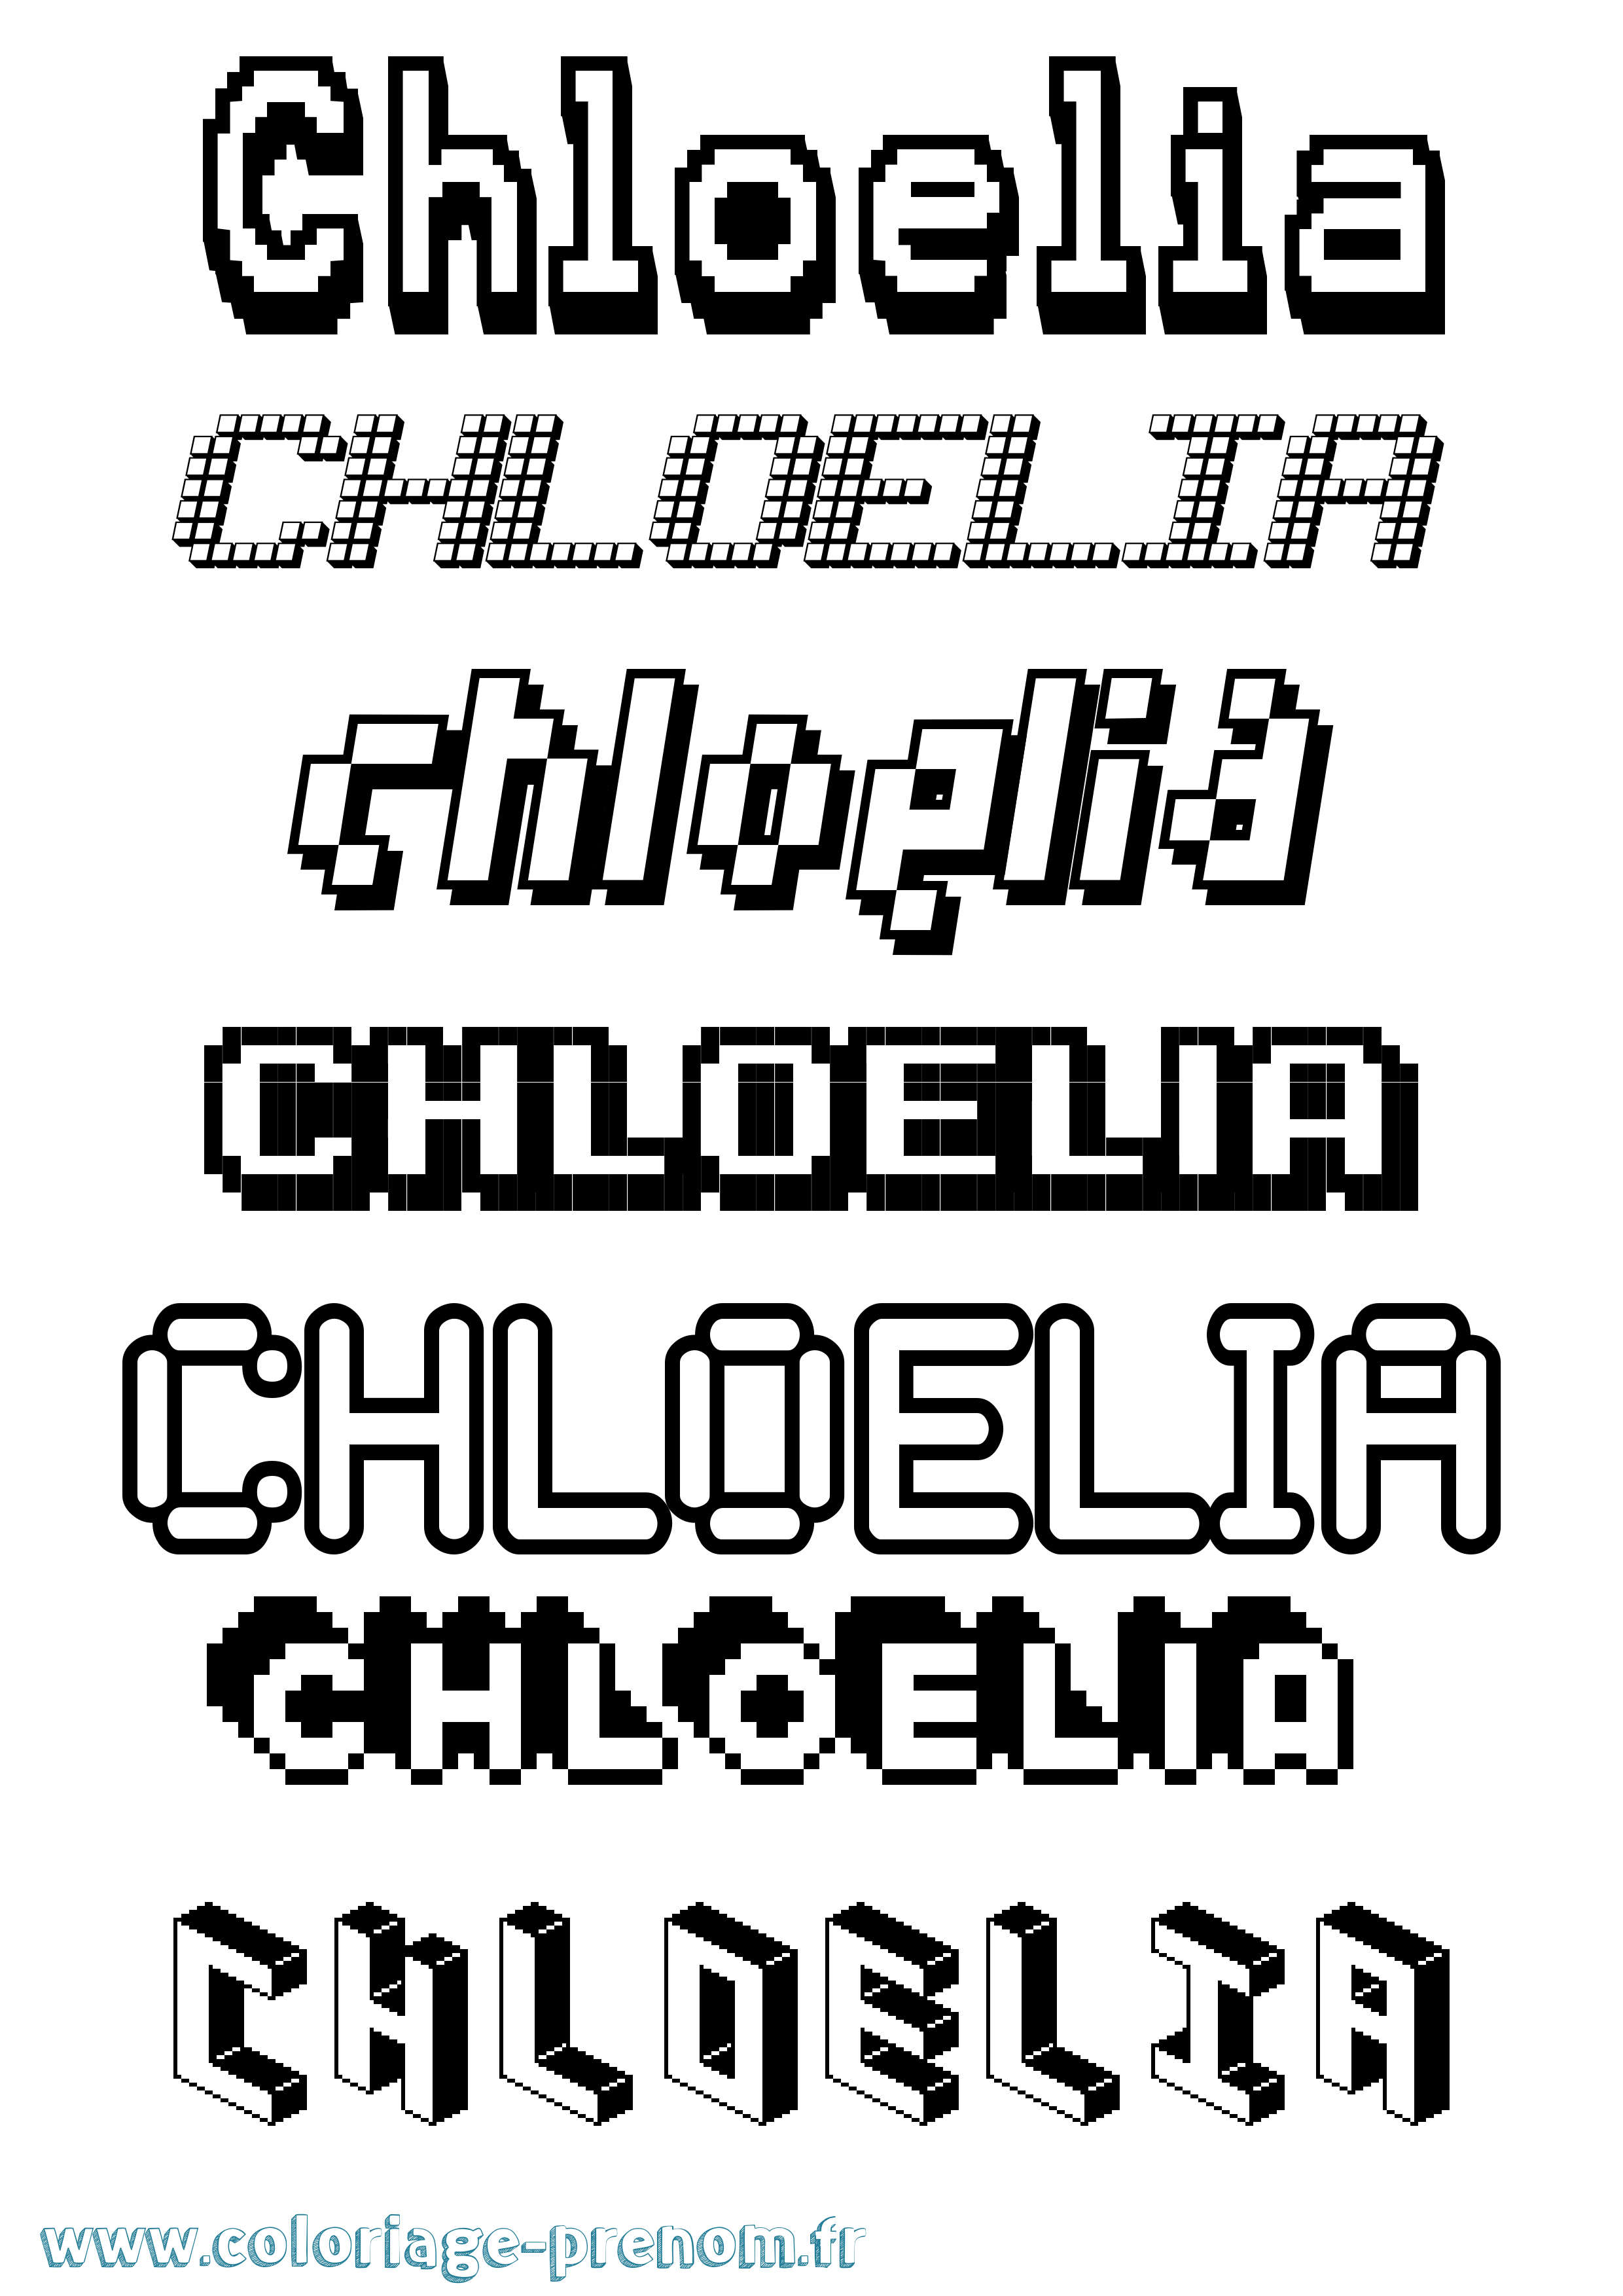 Coloriage prénom Chloelia Pixel